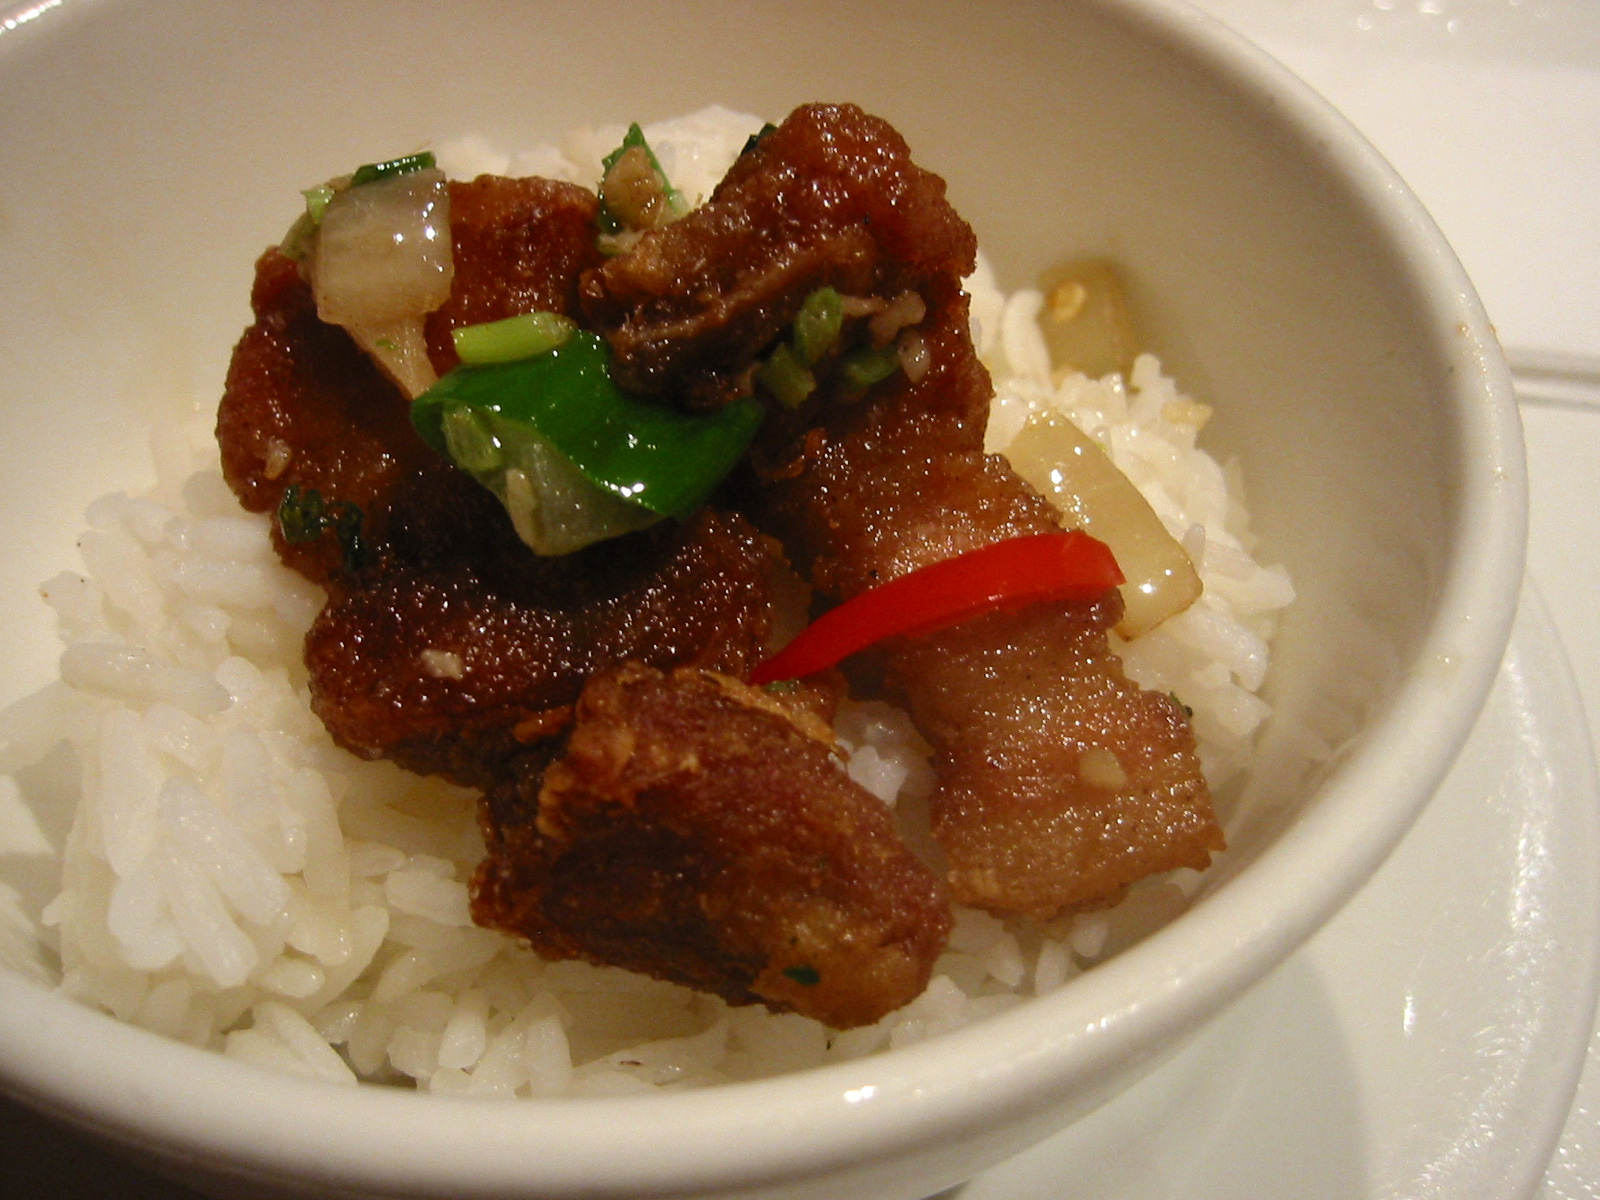 Salt and pepper pork rib on rice (my bowl)